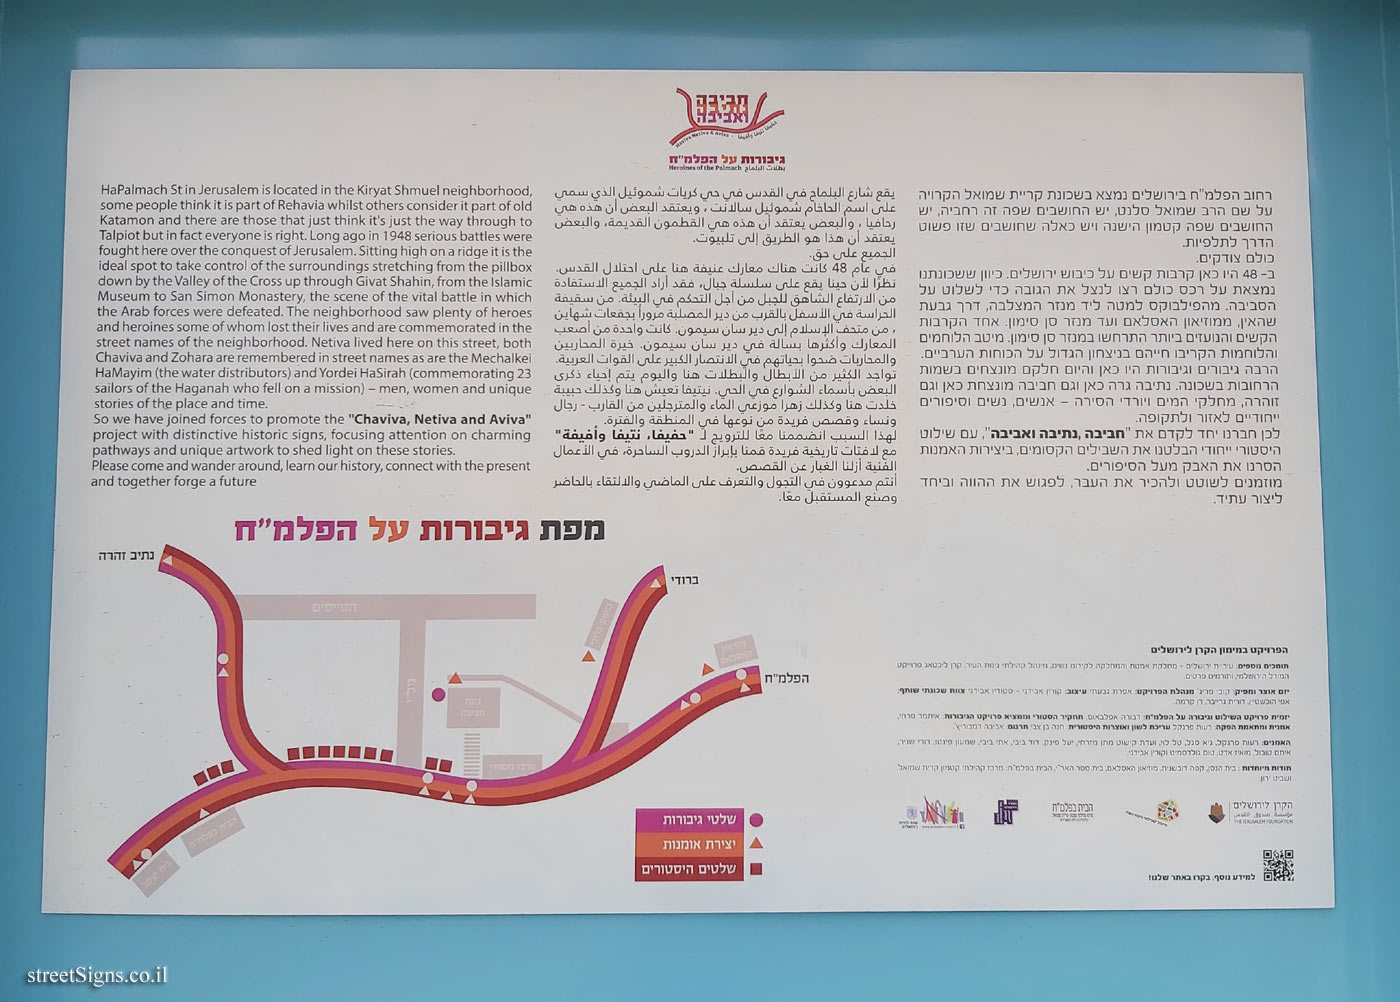 Jerusalem - "Haviva Netiva and Aviva" route - About the route